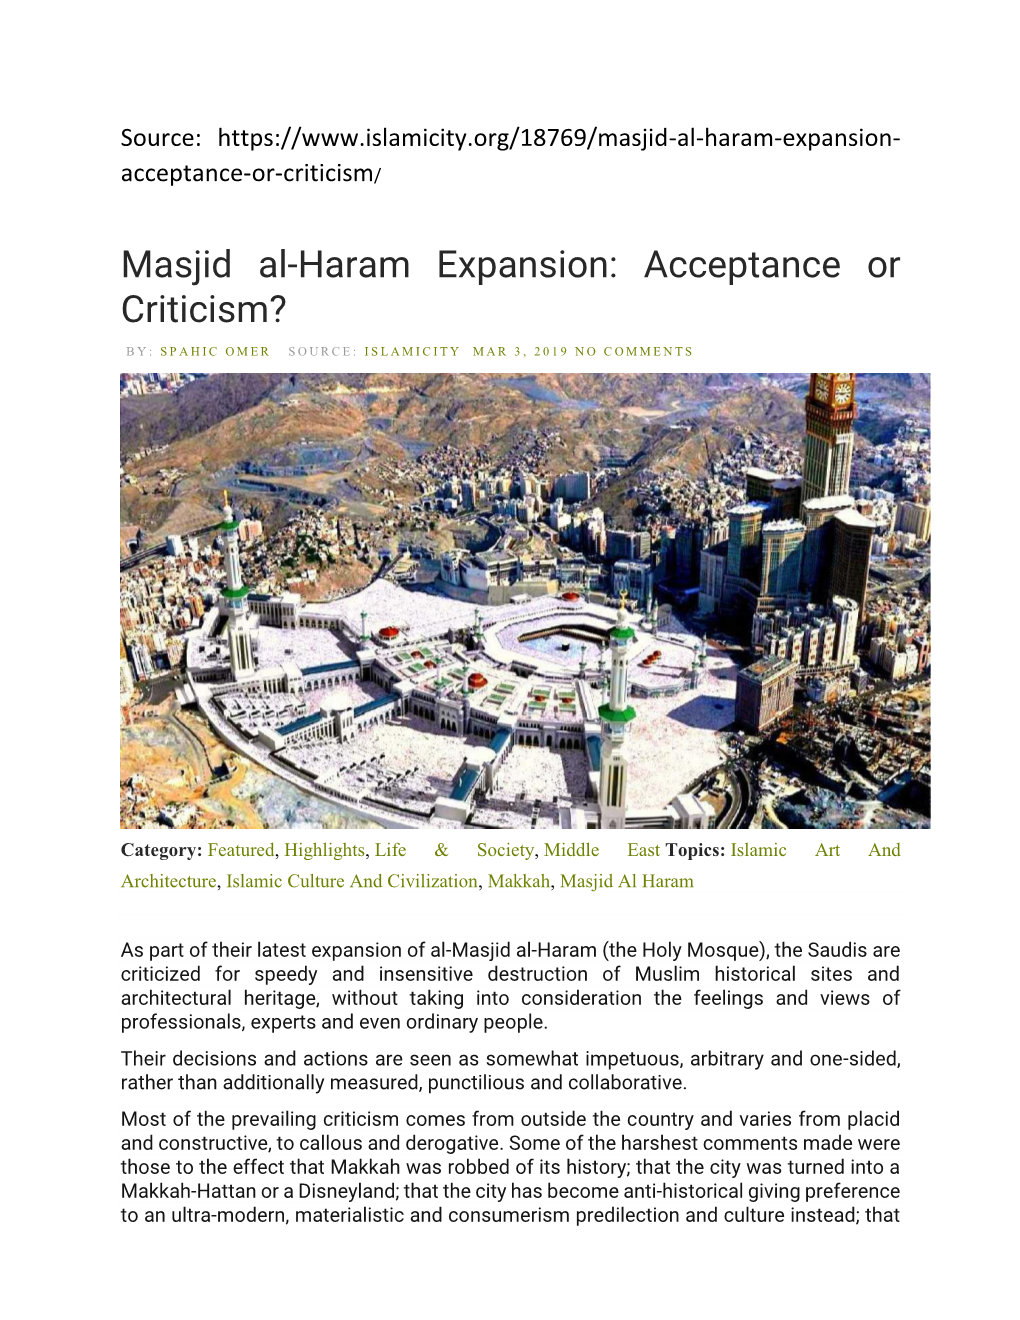 Masjid Al-Haram Expansion: Acceptance Or Criticism?